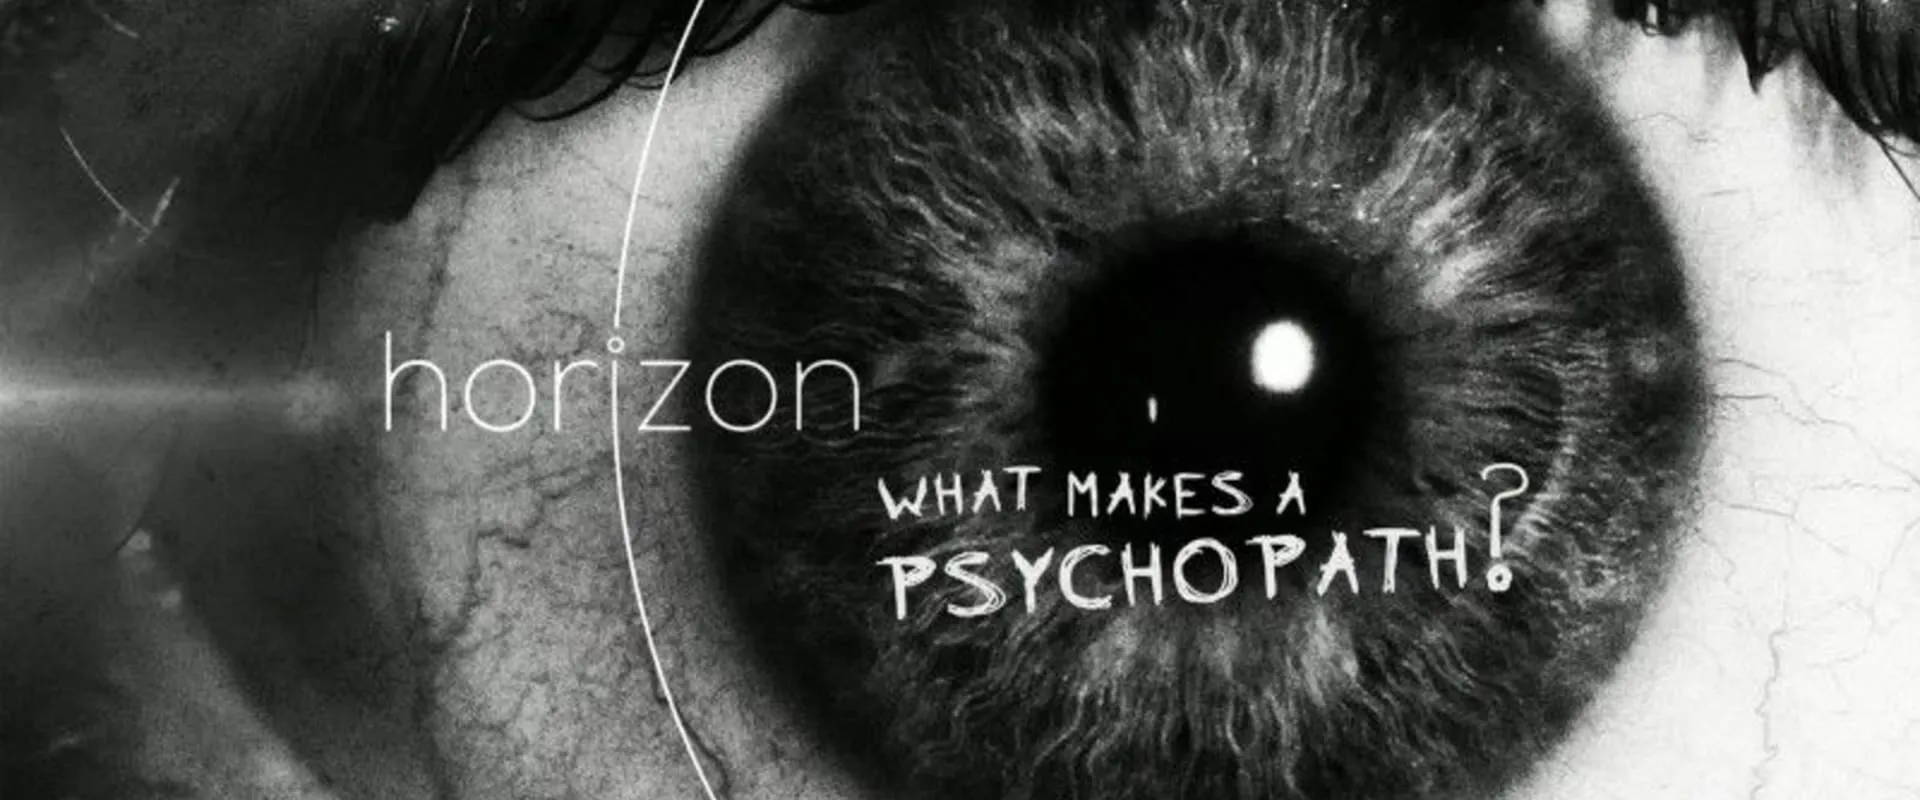 What Makes a Psychopath? (2017)